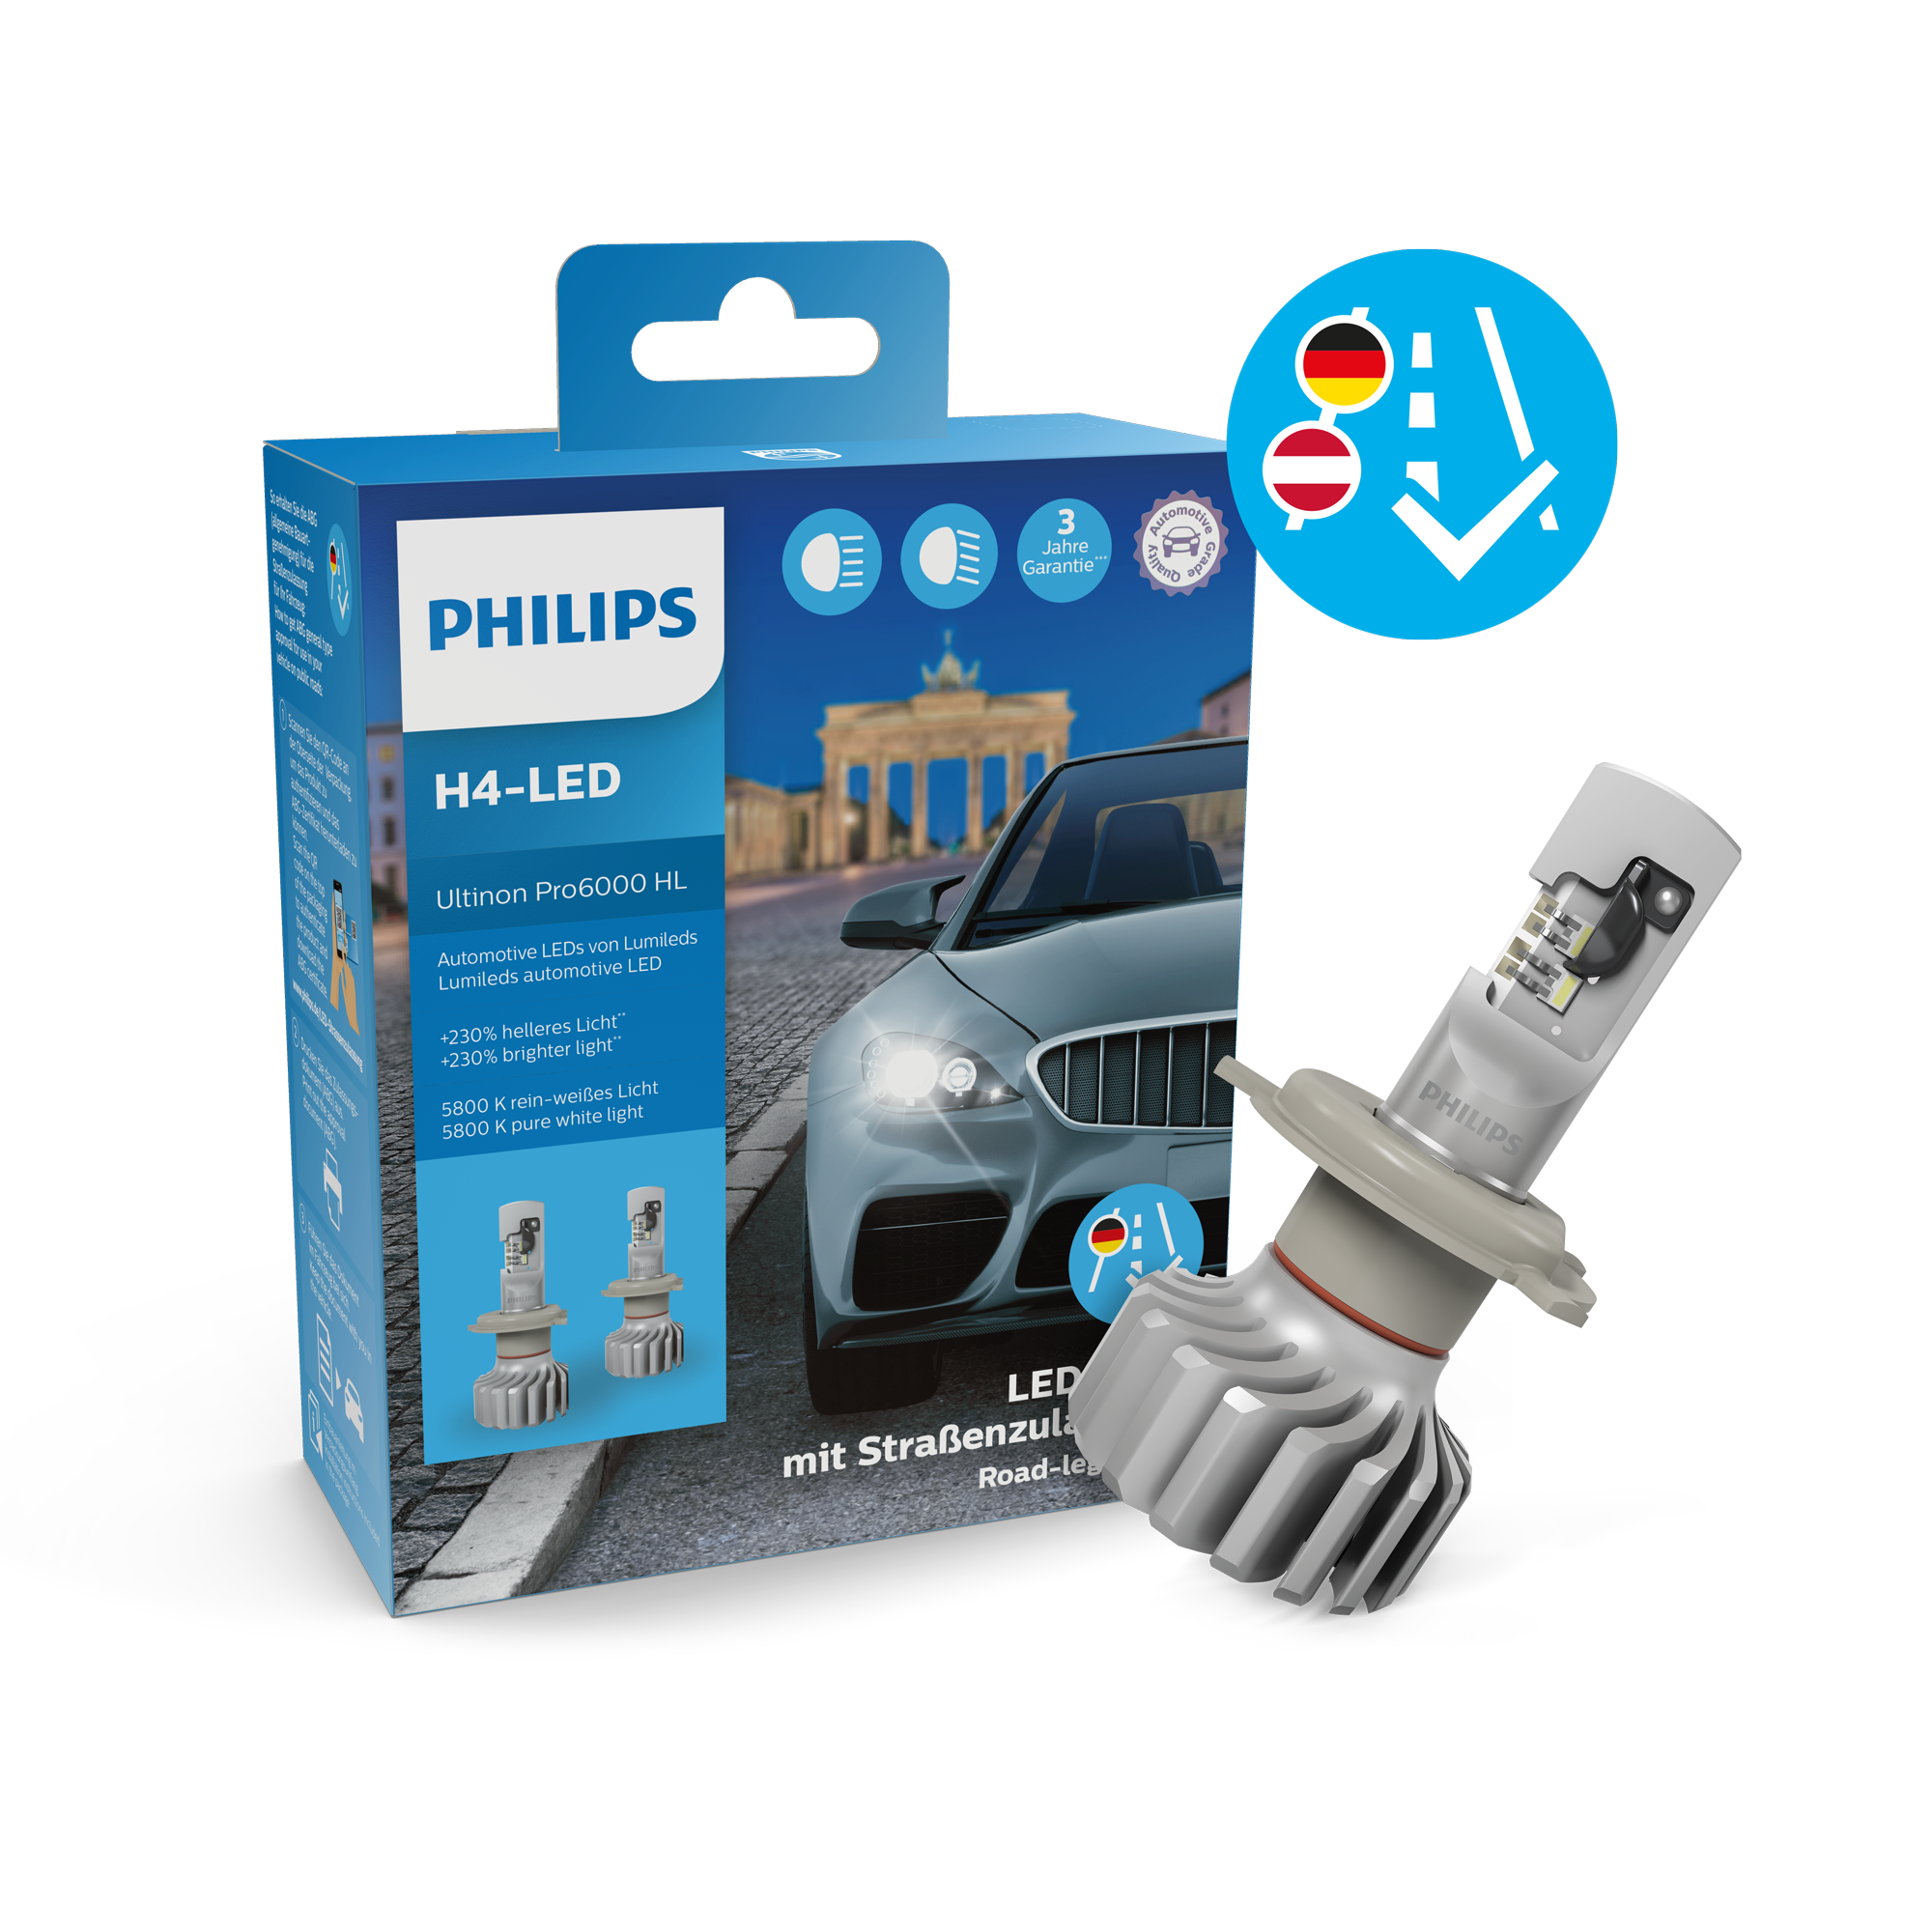 Philips Ultinon Pro6000 LED - Jetzt erstmals als W5W-LED